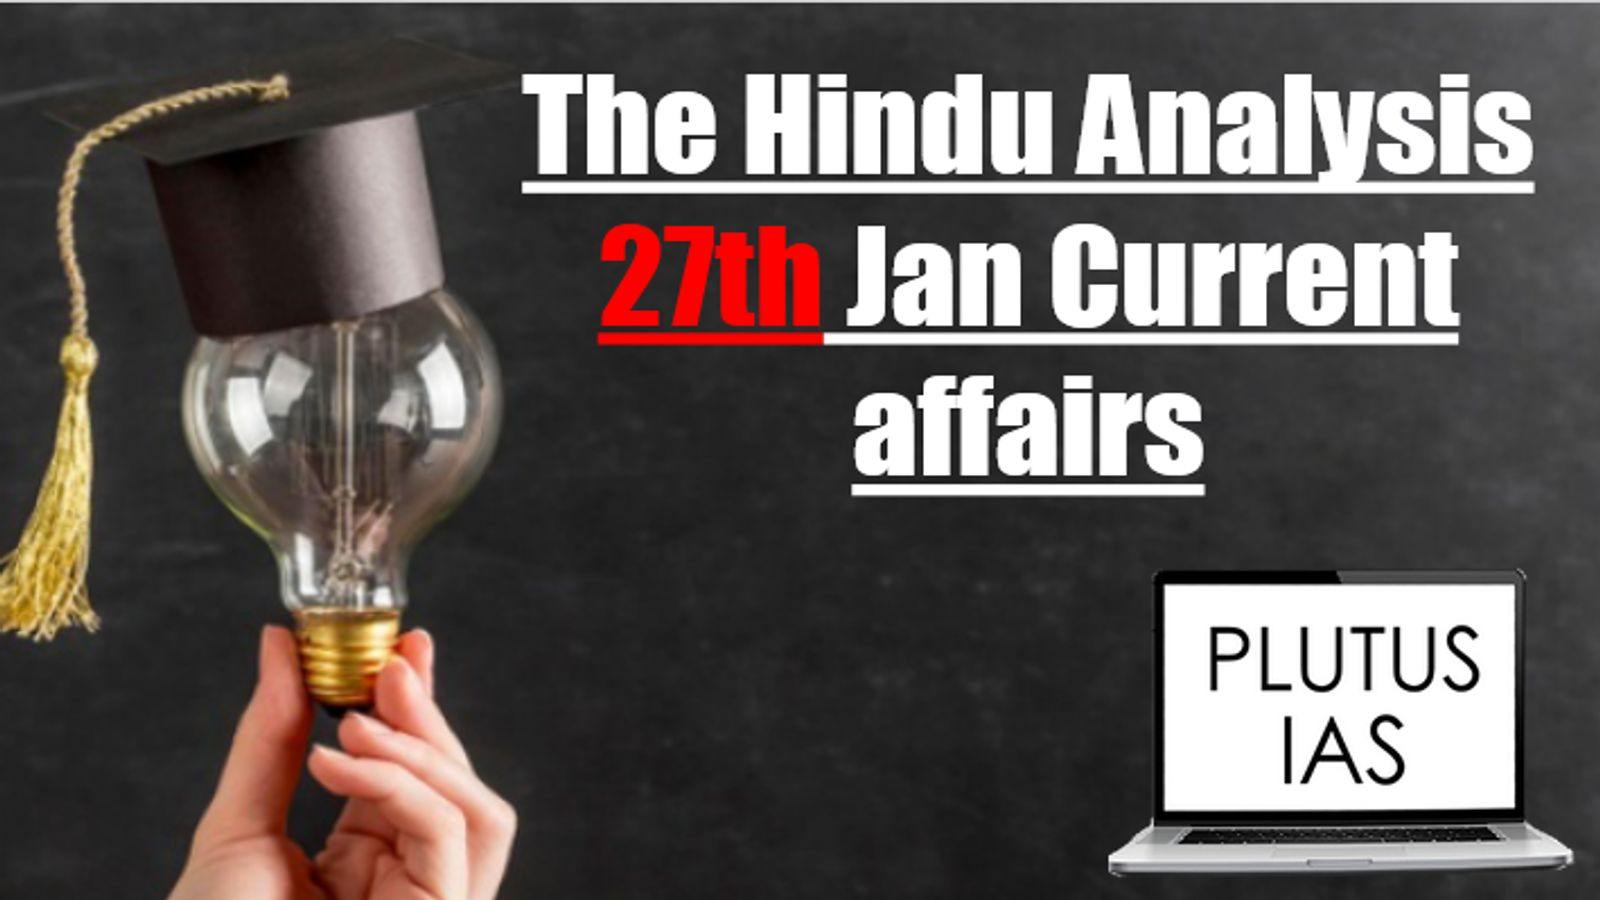 The Hindu Analysis 27th January